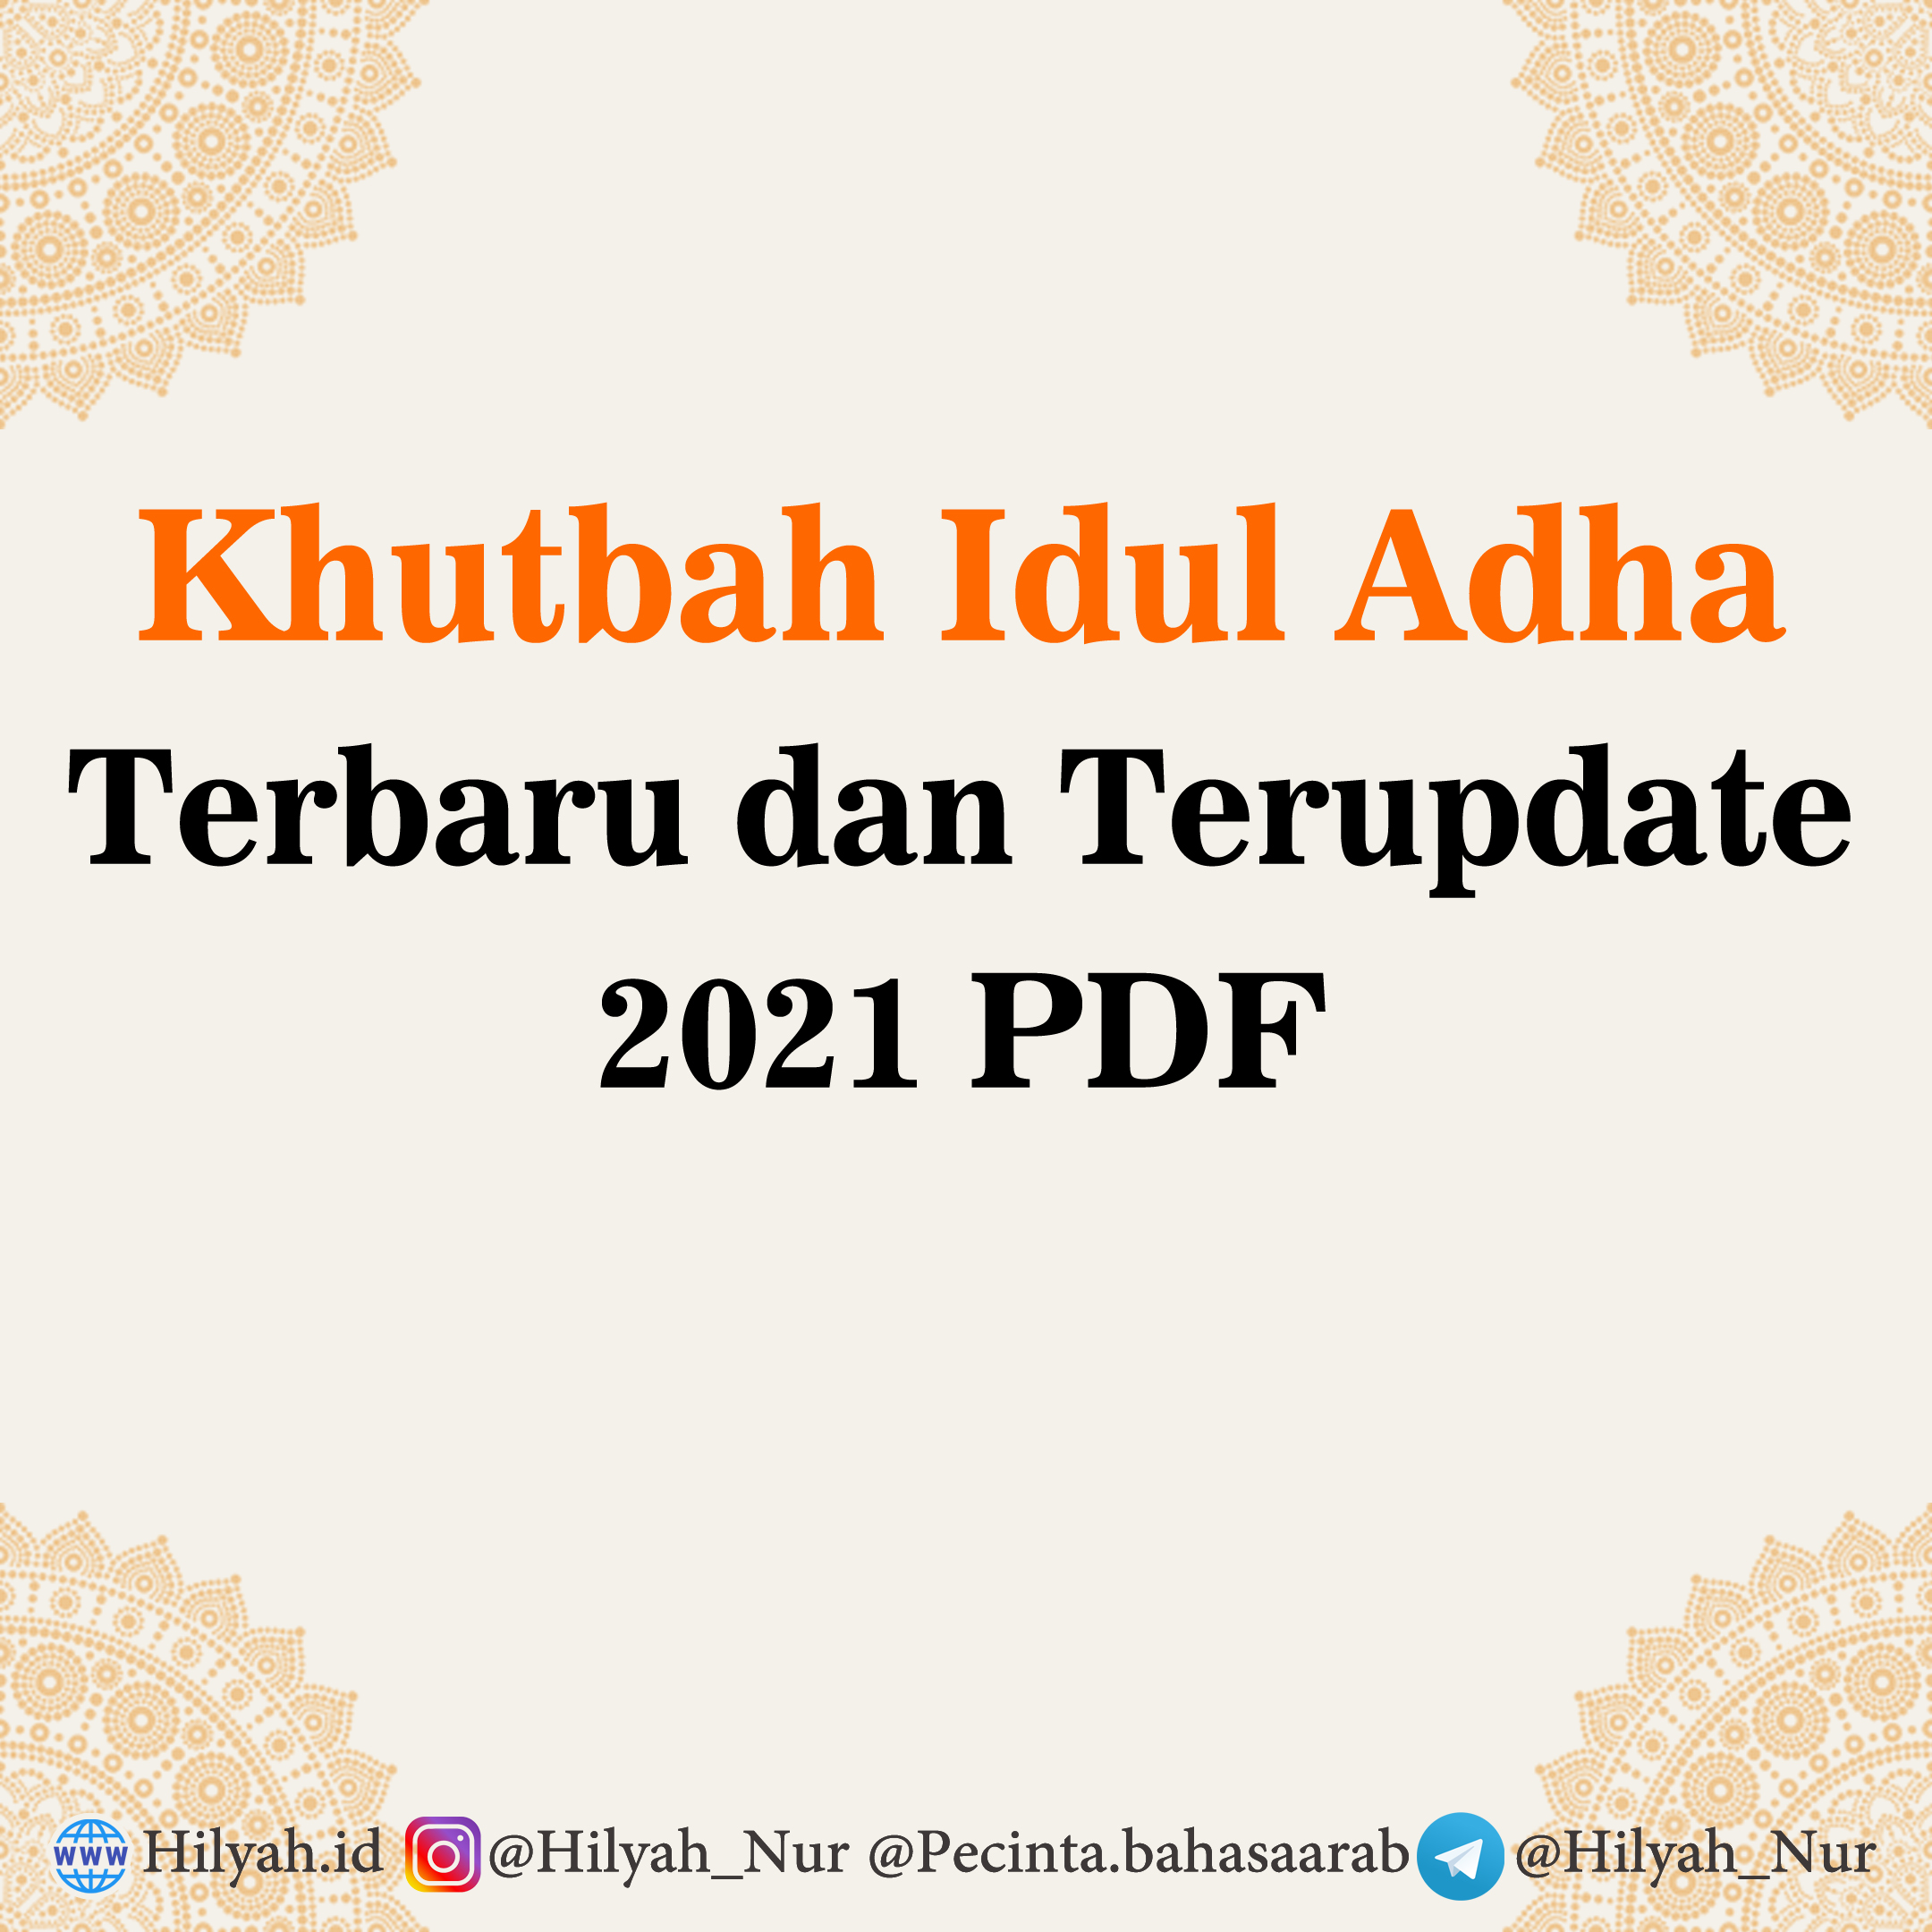 Khtubah Idul Adha Terbaru 2021, Khutbah Idul Adha PDF, Khutbah Idul Adha Terabru PDF 2021